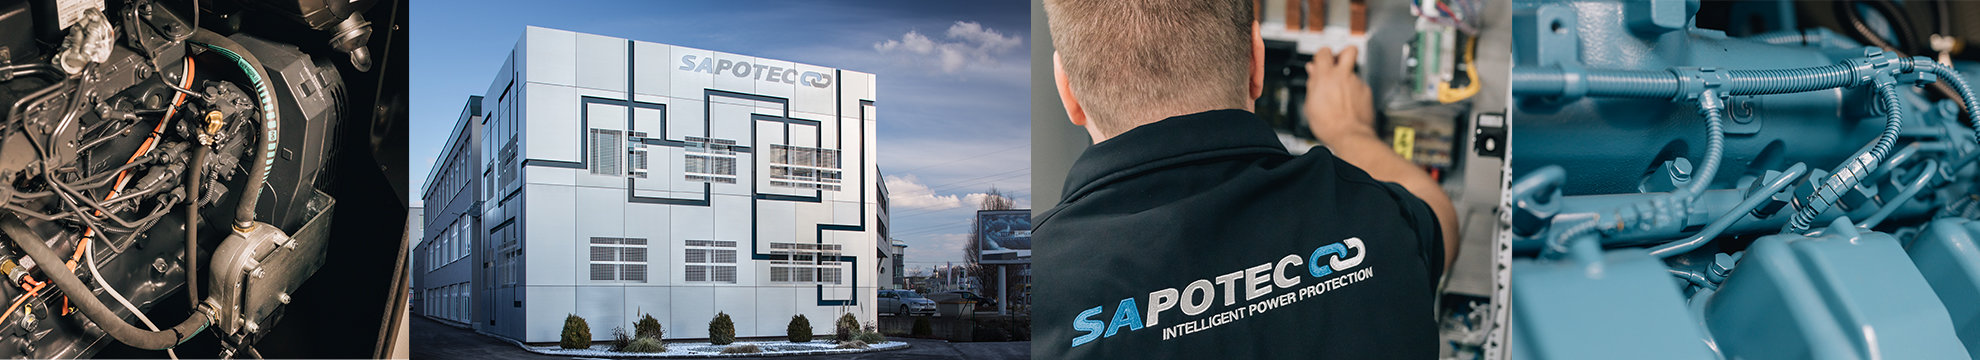 SAPOTEC GmbH